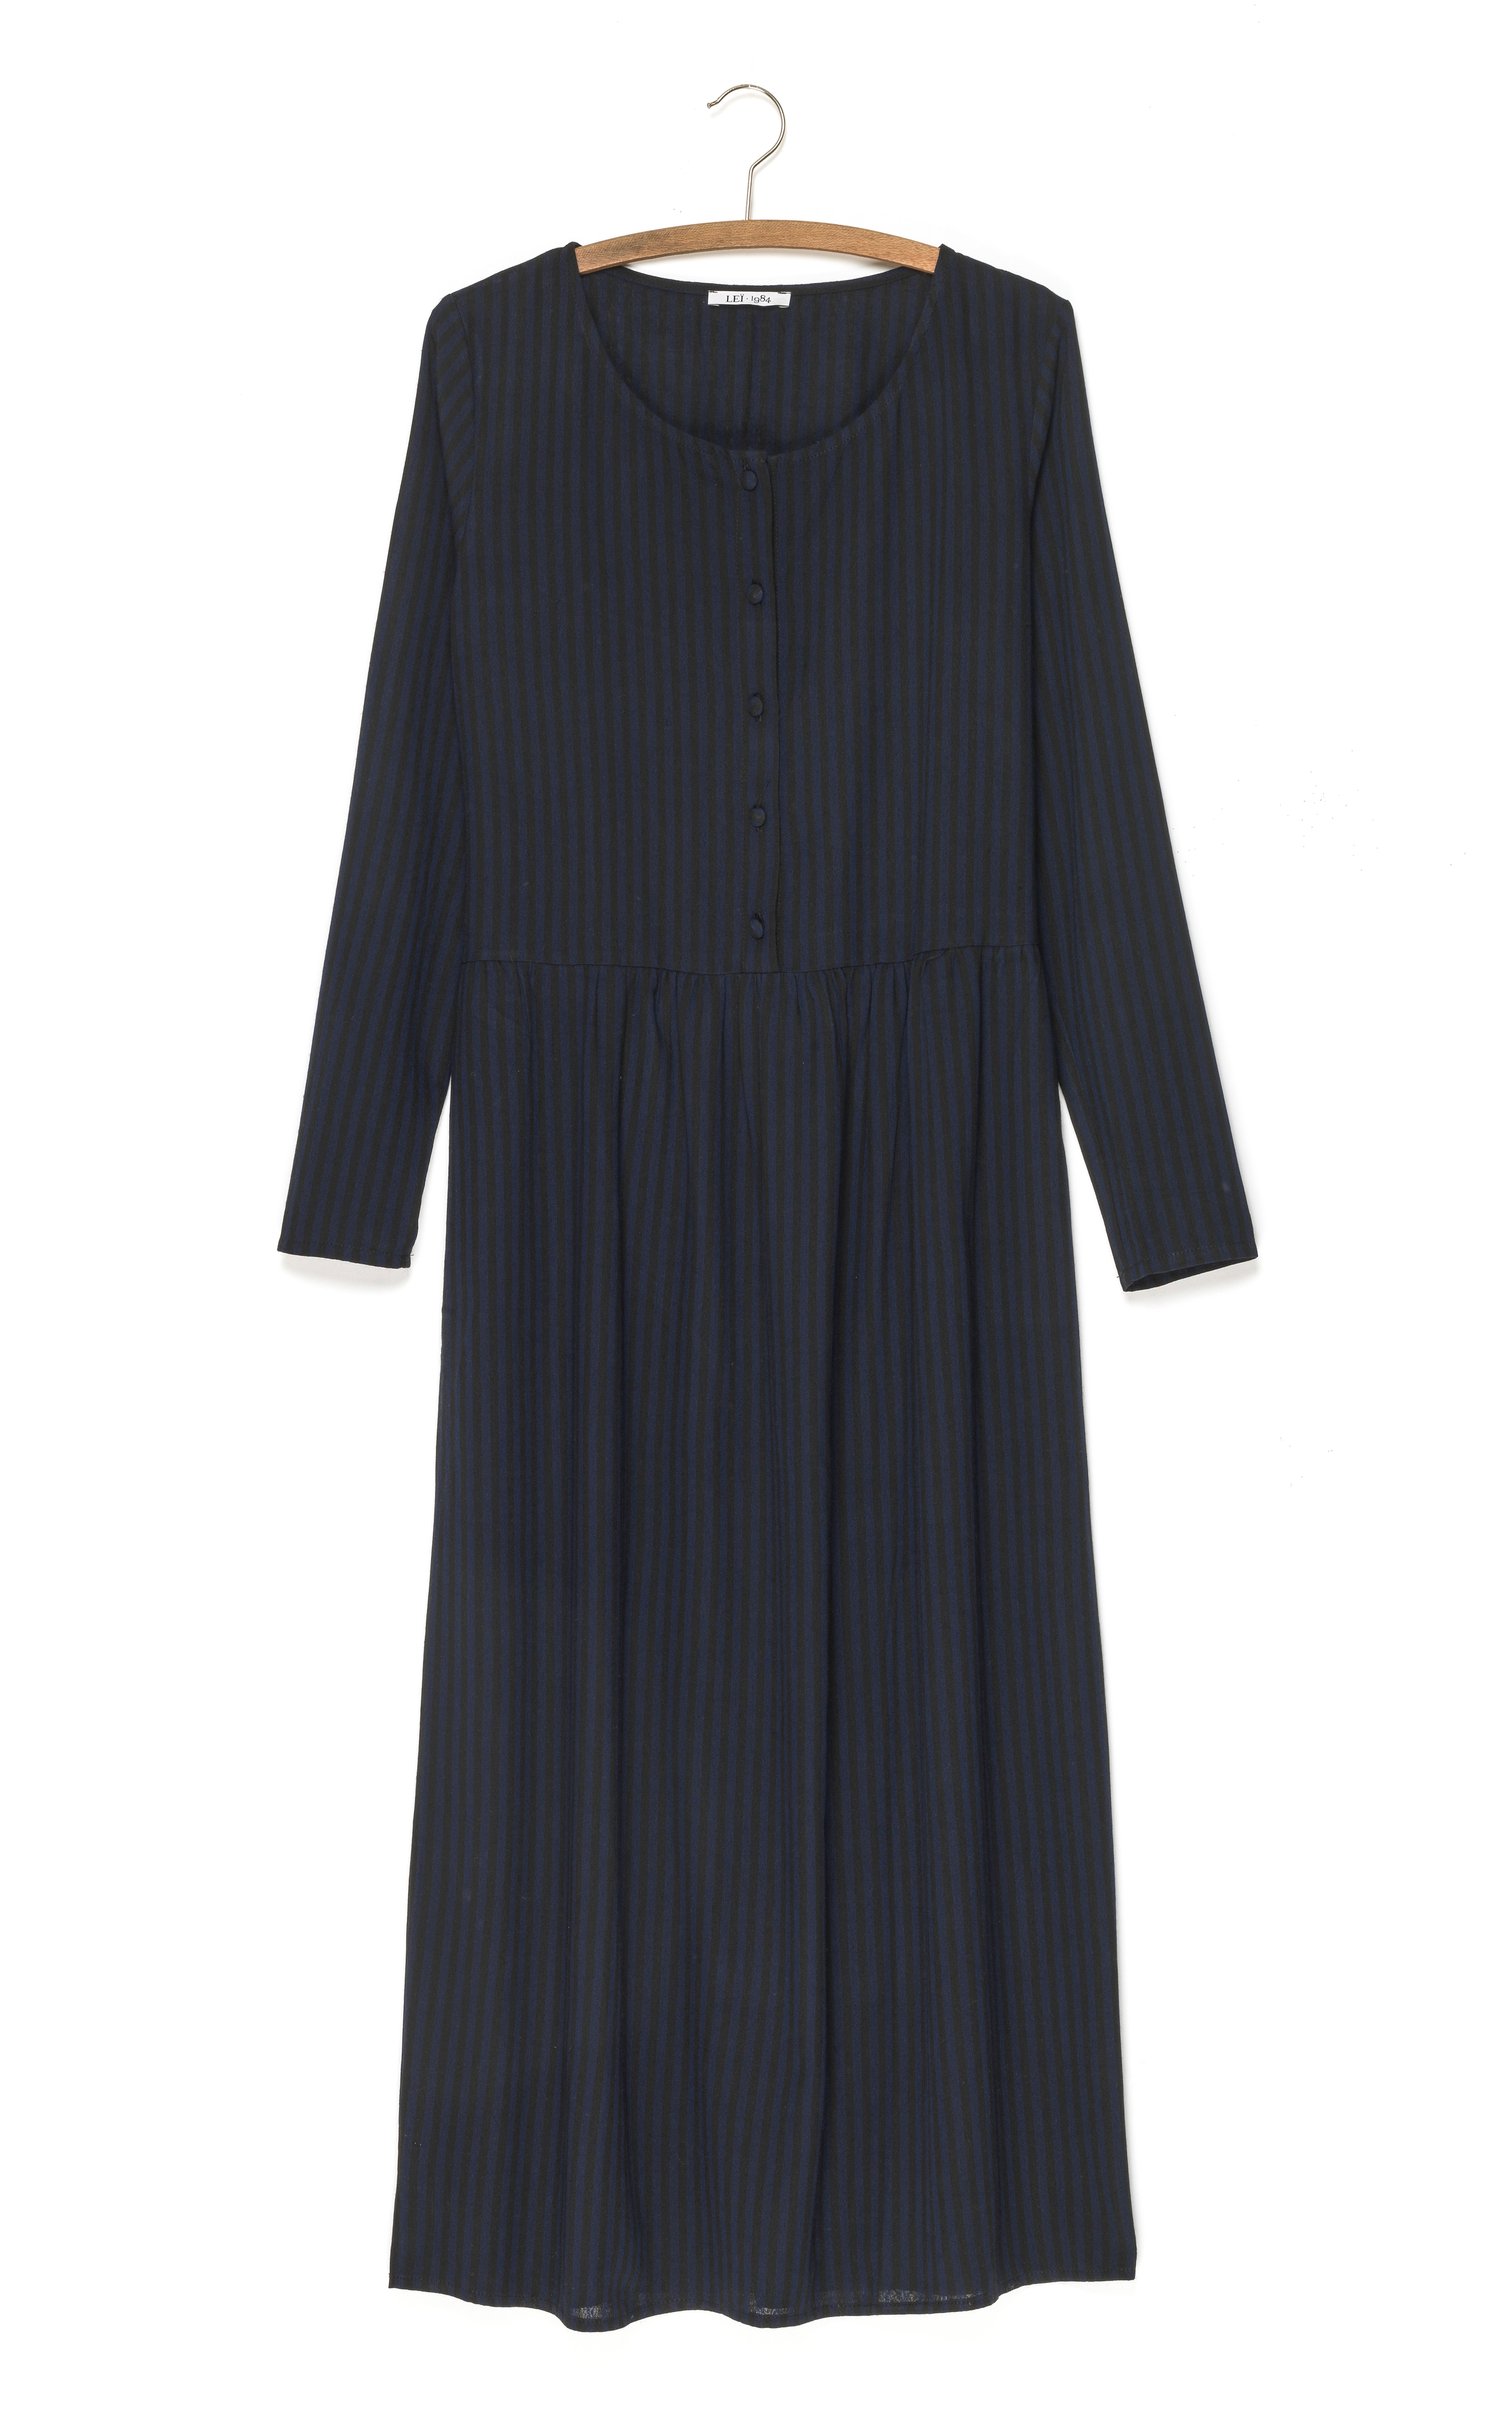 Image of Robe longue rayée bleu/noir ANTONINE 189€ -60%